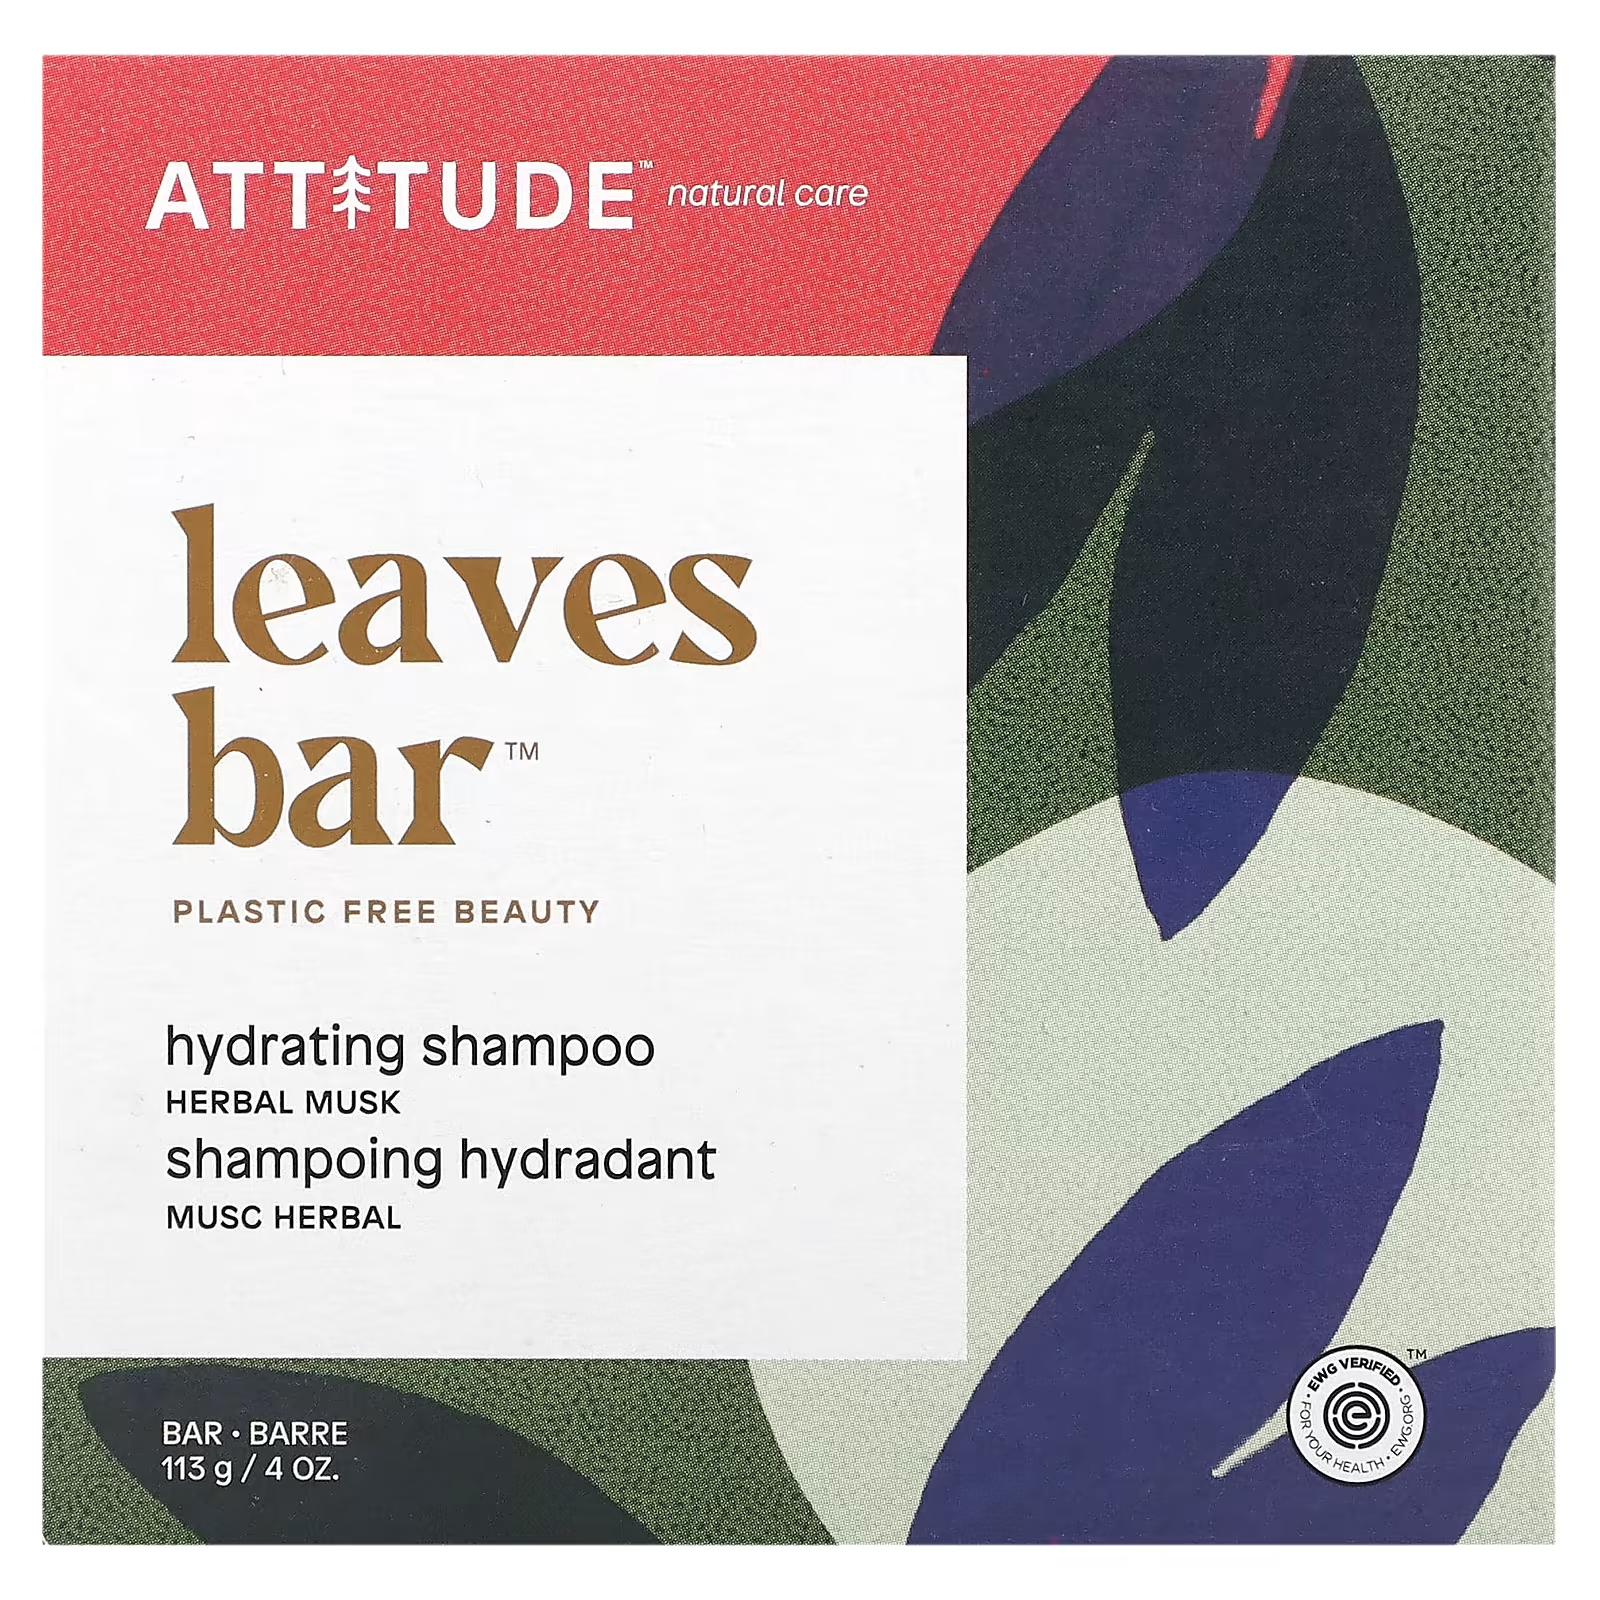 Шампунь ATTITUDE Leaves Bar увлажняющий травяной мускус, 113 г детокс кондиционер attitude leaves bar морская соль 113 г